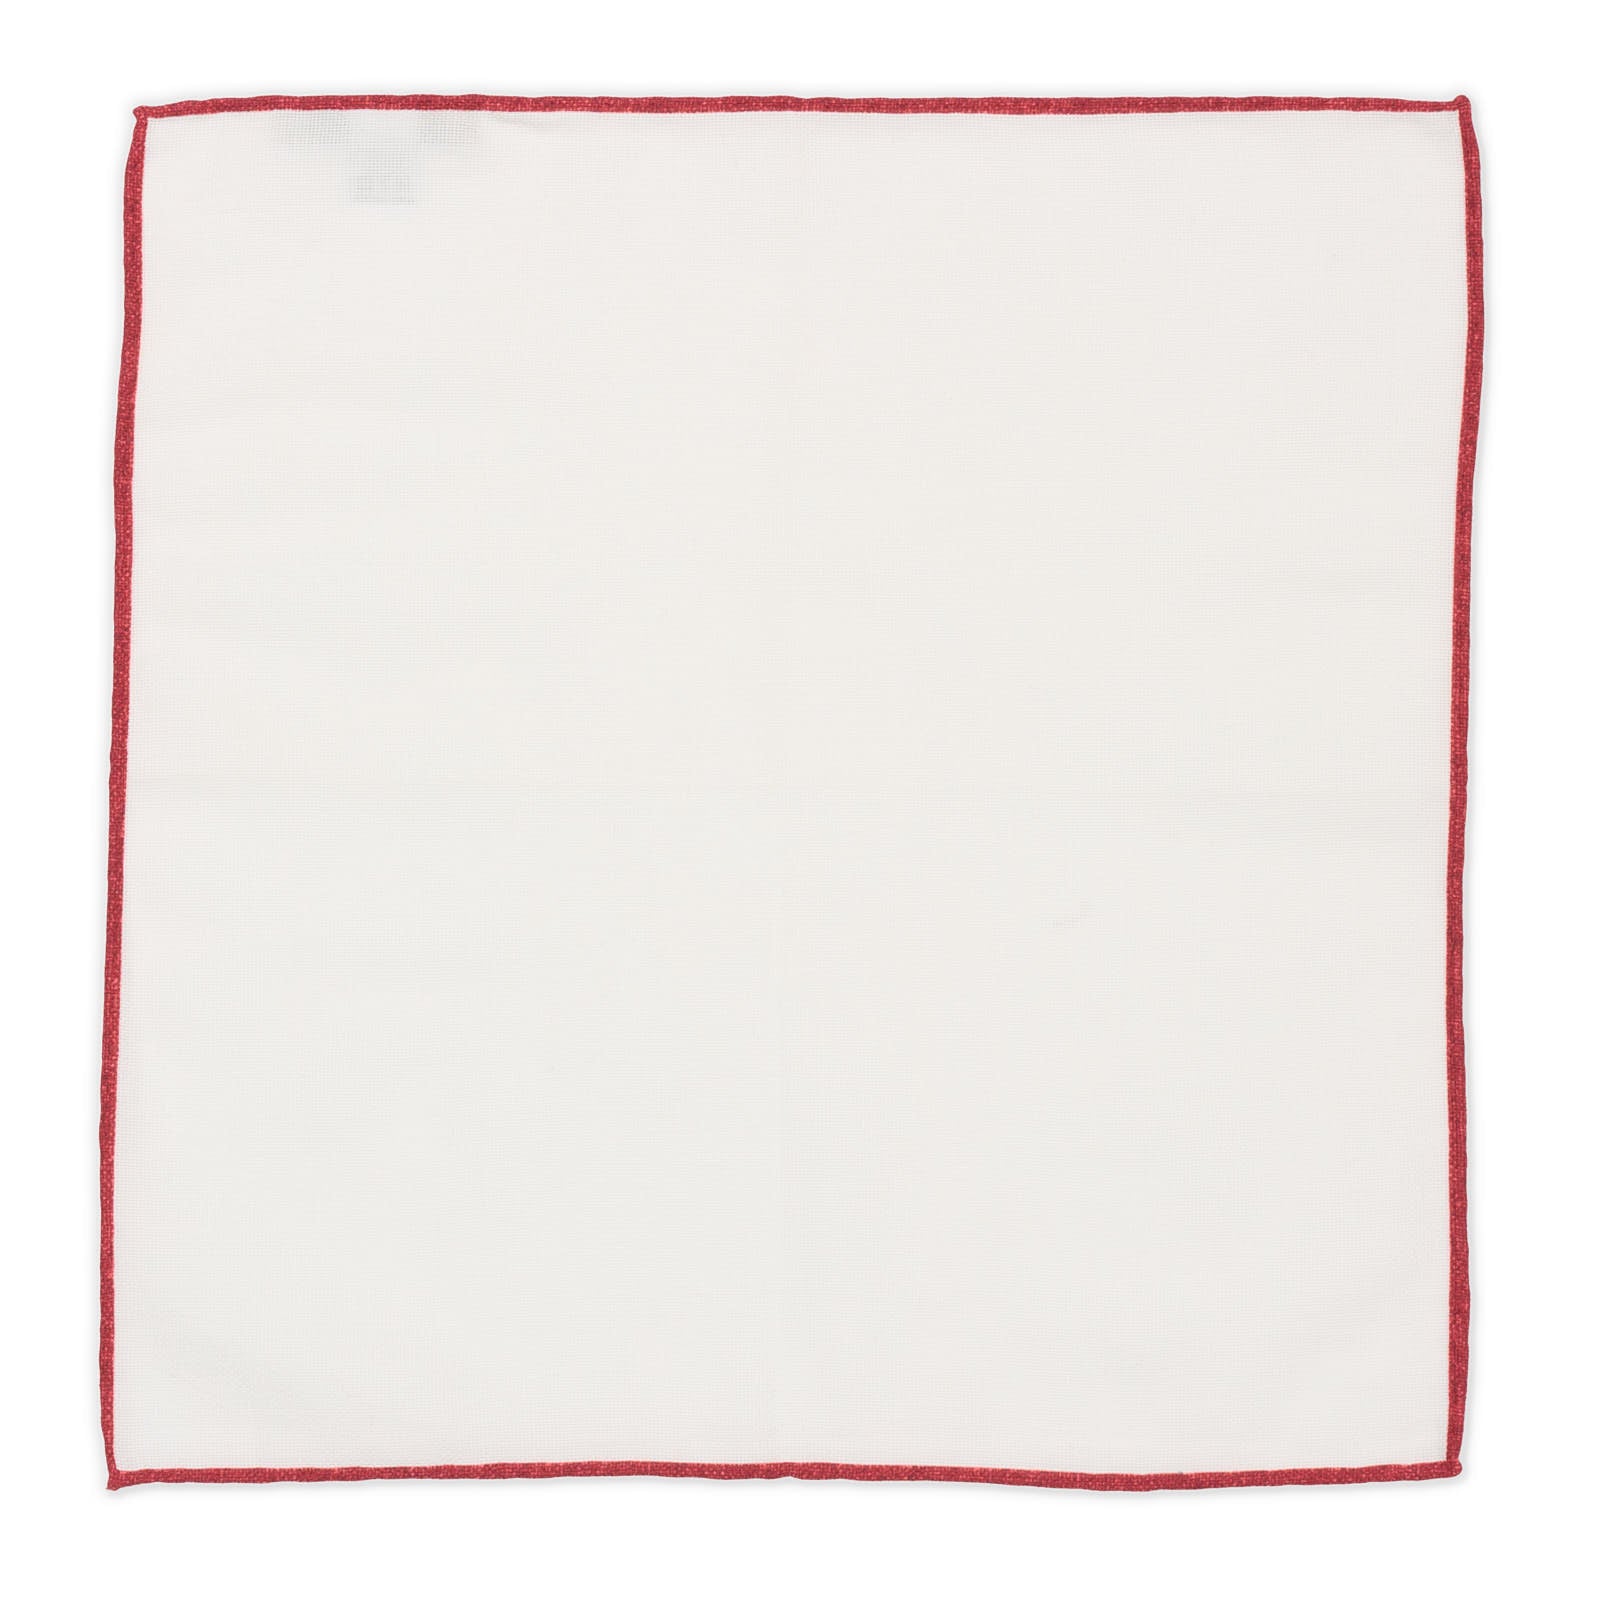 ROSI Handmade White-Burgundy Solid Cotton Pocket Square NEW 31cm x 31cm